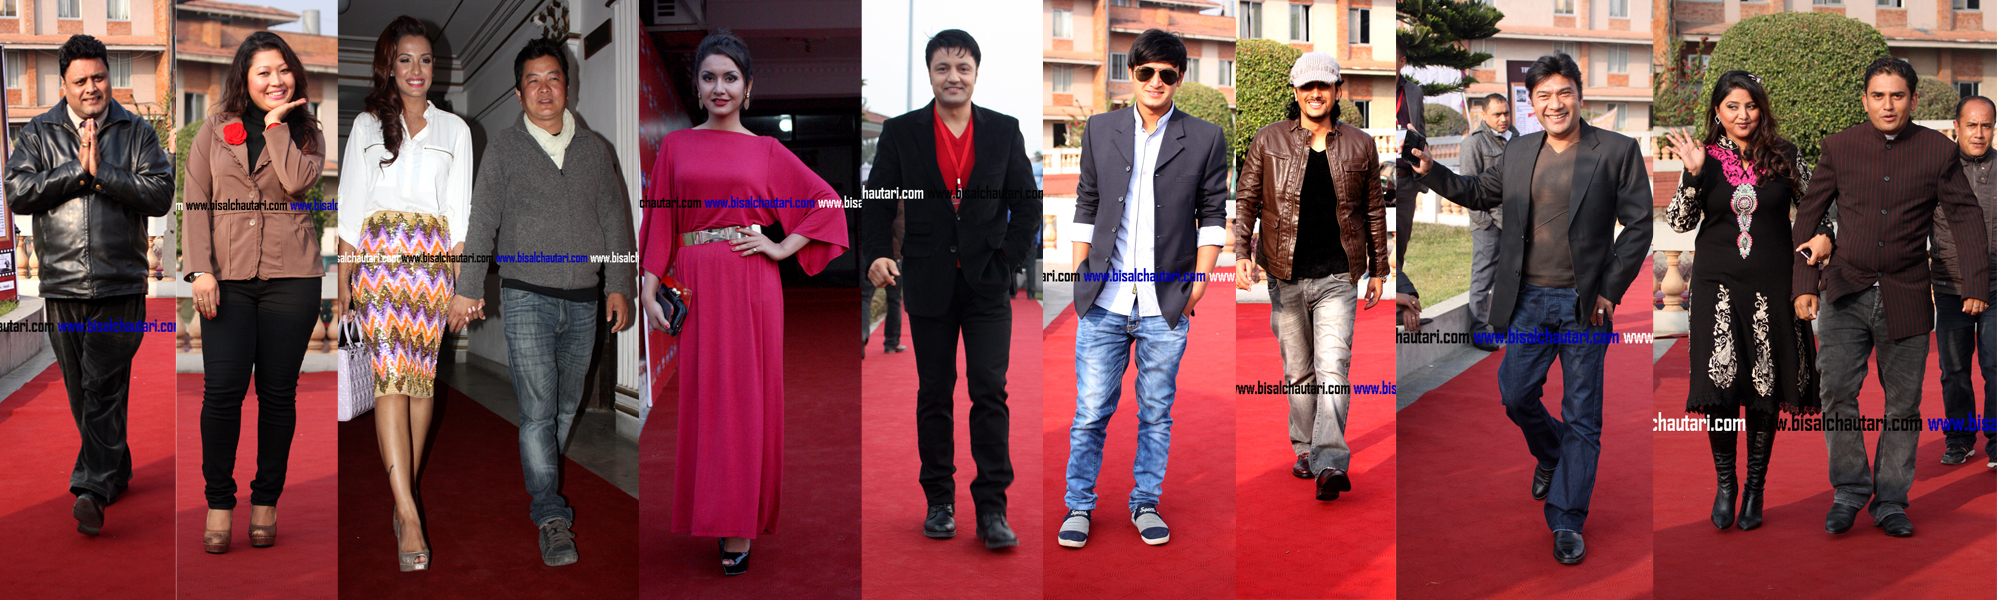 kamana film awards 2014 red carpet (3)